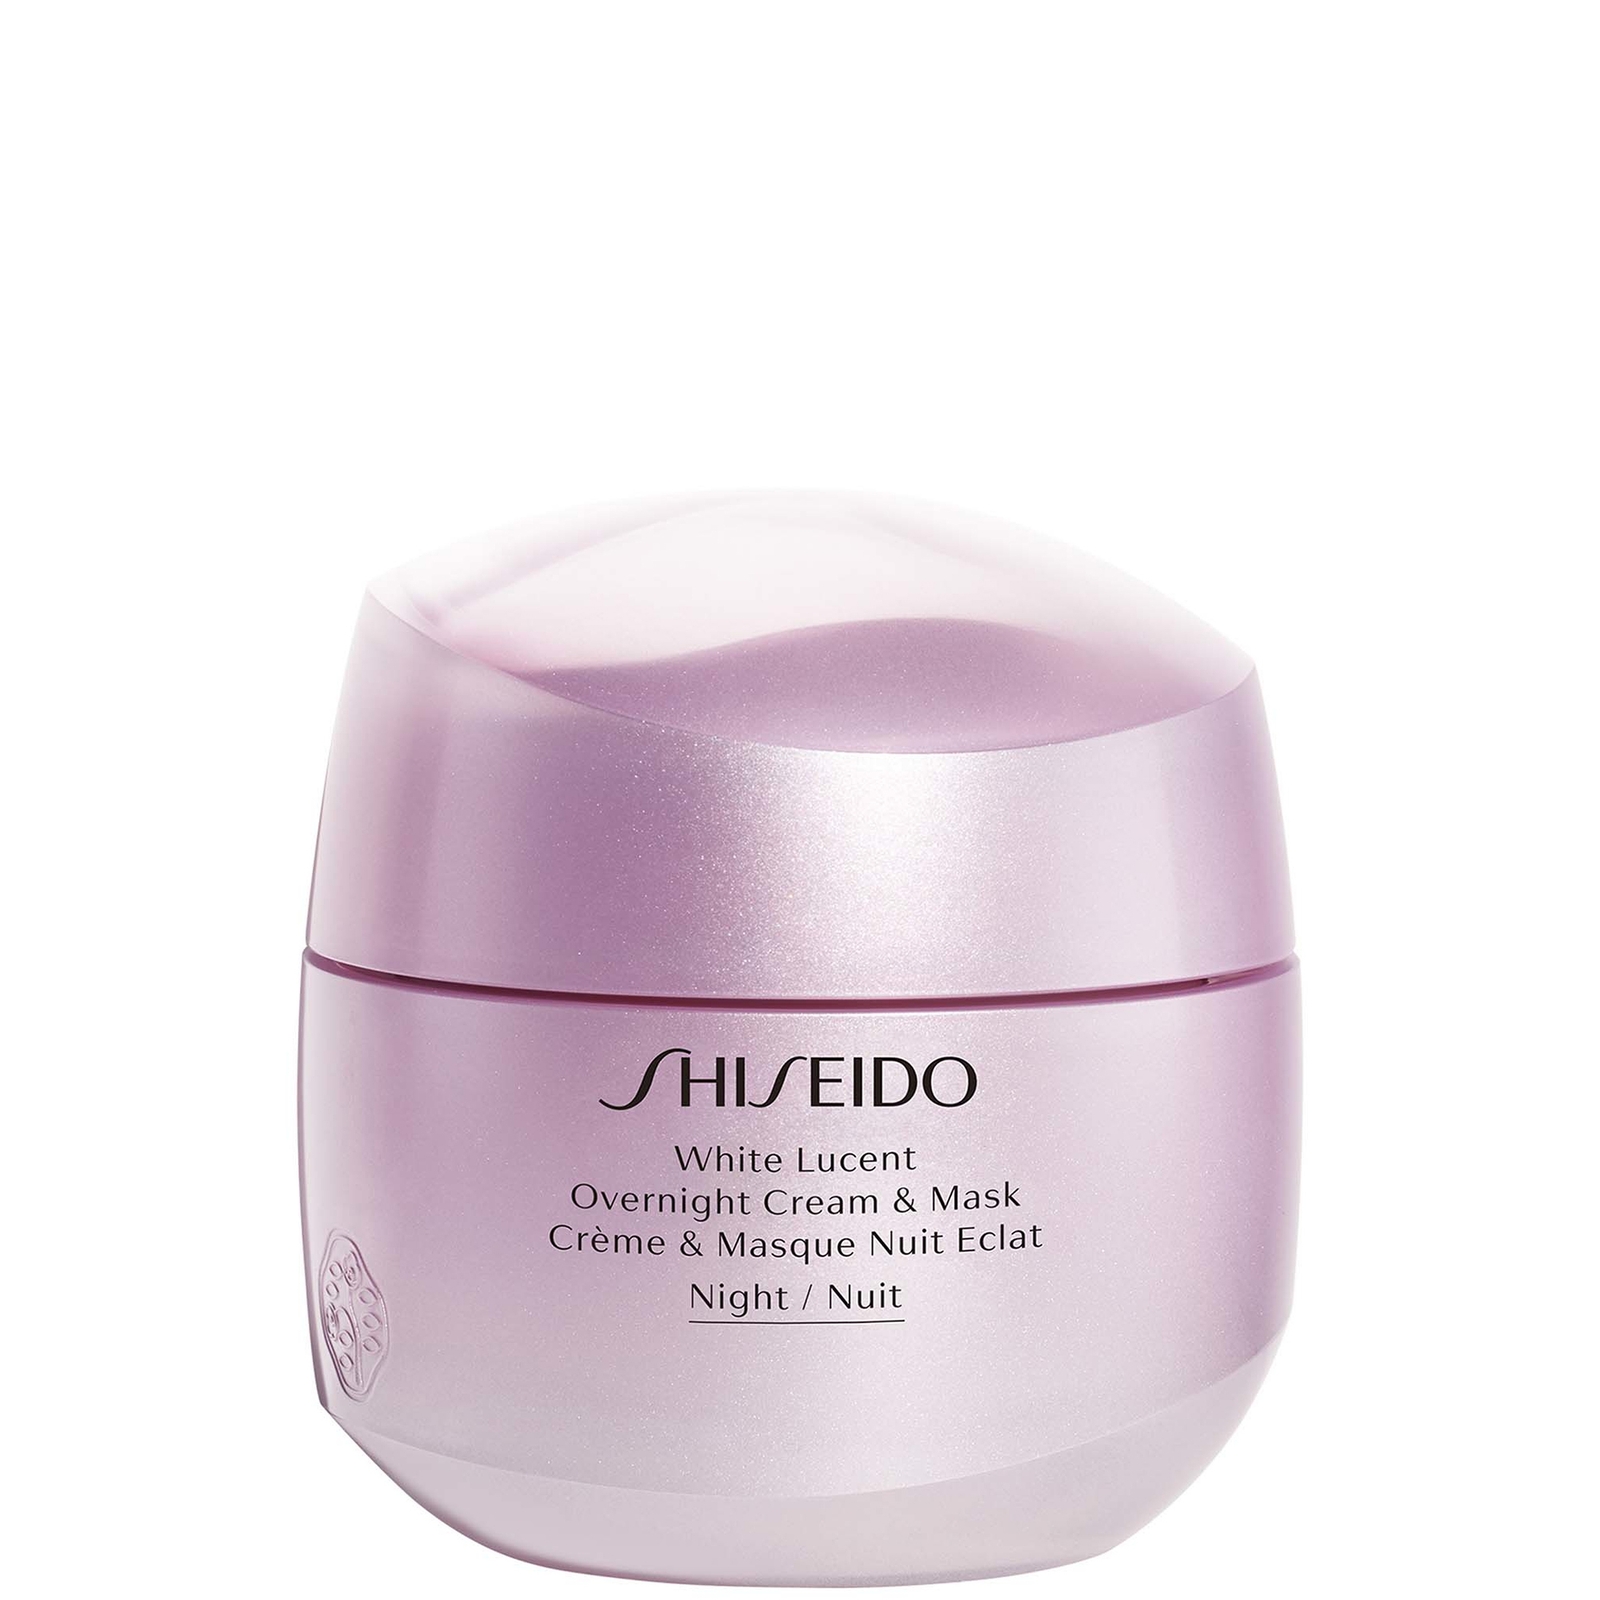 Zdjęcia - Maska do twarzy Shiseido White Lucent Overnight Cream and Mask 75ml 10114933201 